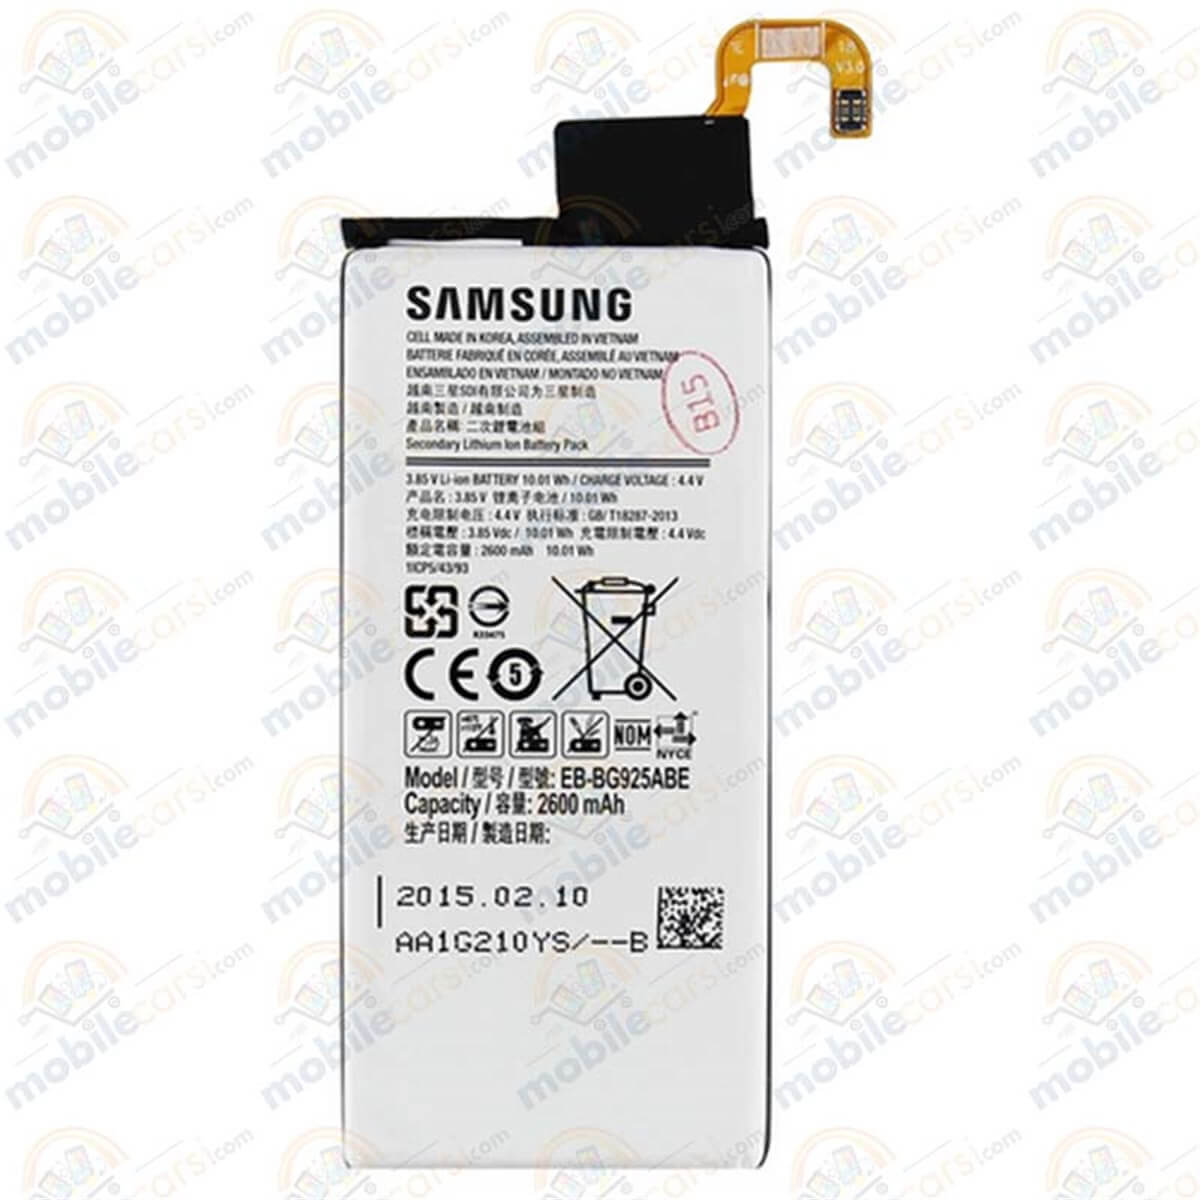 Samsung Galaxy S6 Edge Orjinal Batarya - mobilecarsi